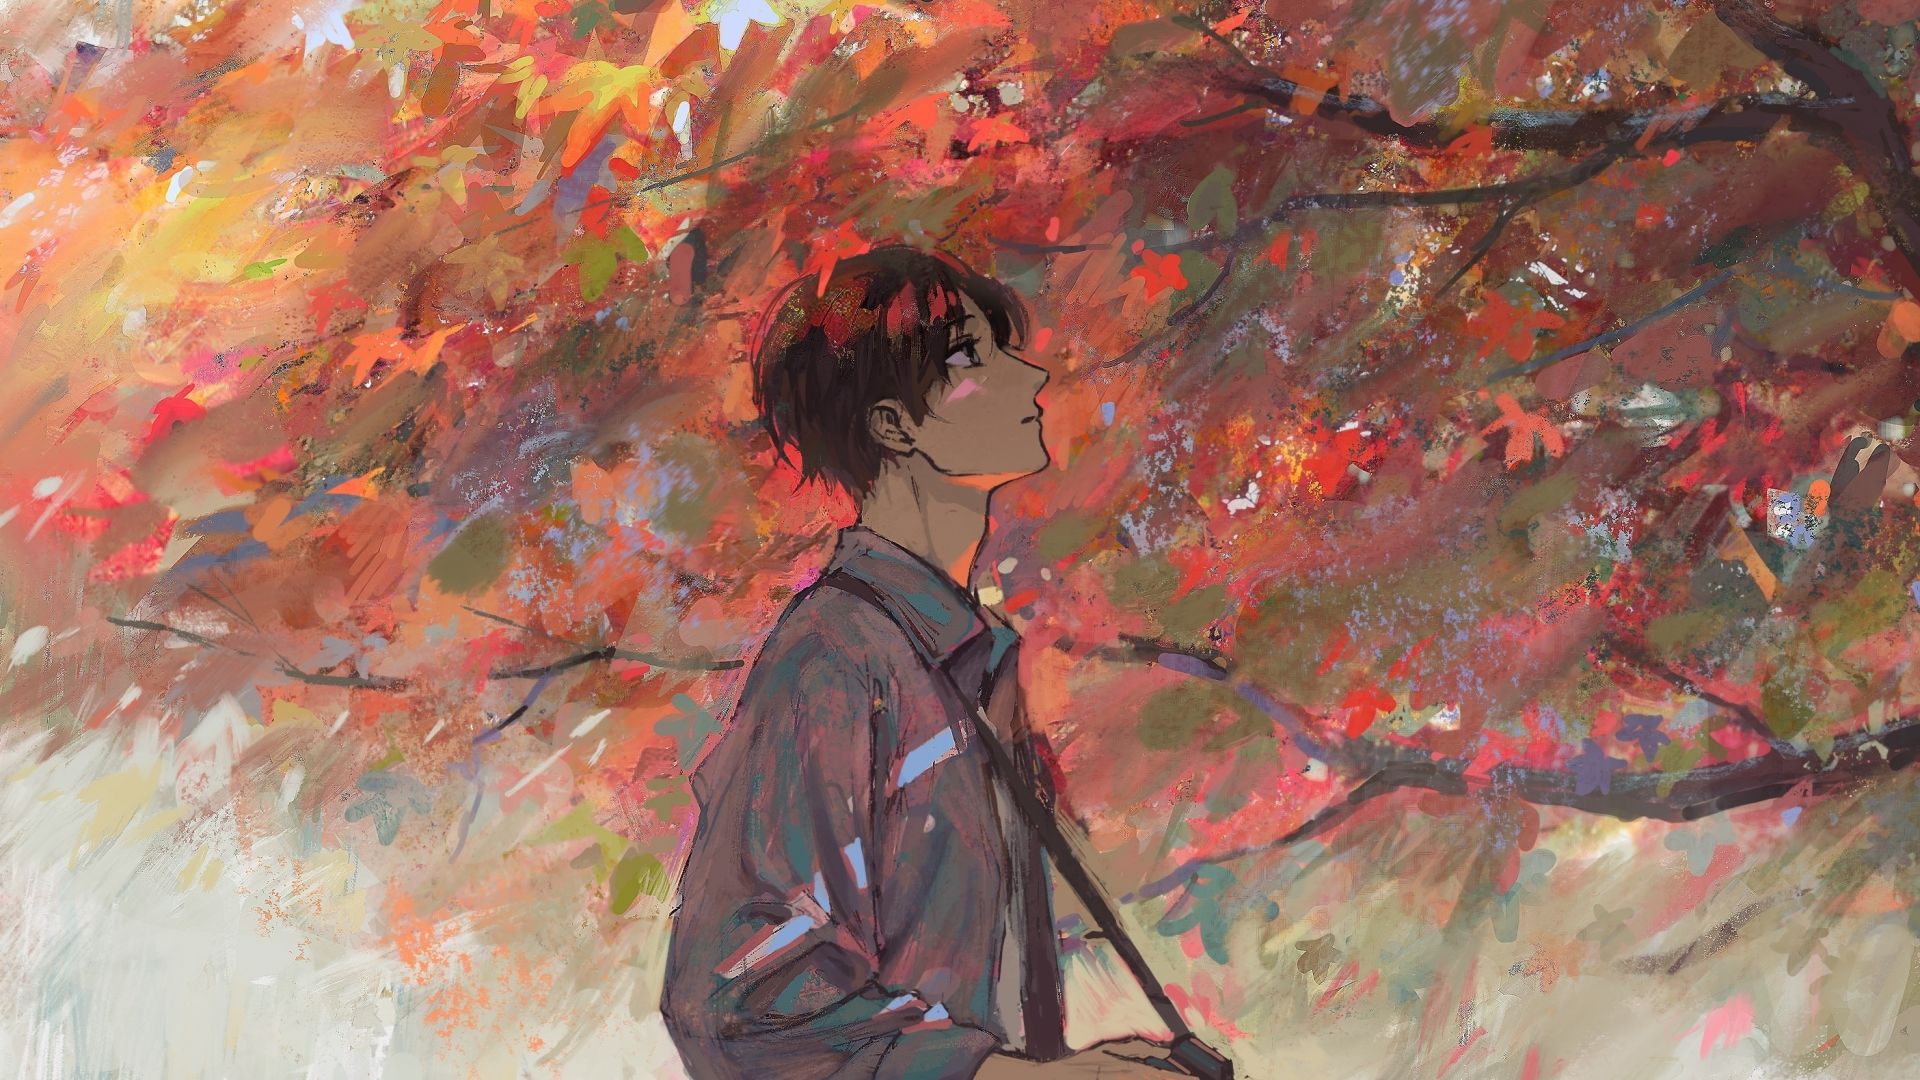 Anime boy, autumn, tree, artwork wallpaper, HD image, picture, background, 6c12f3